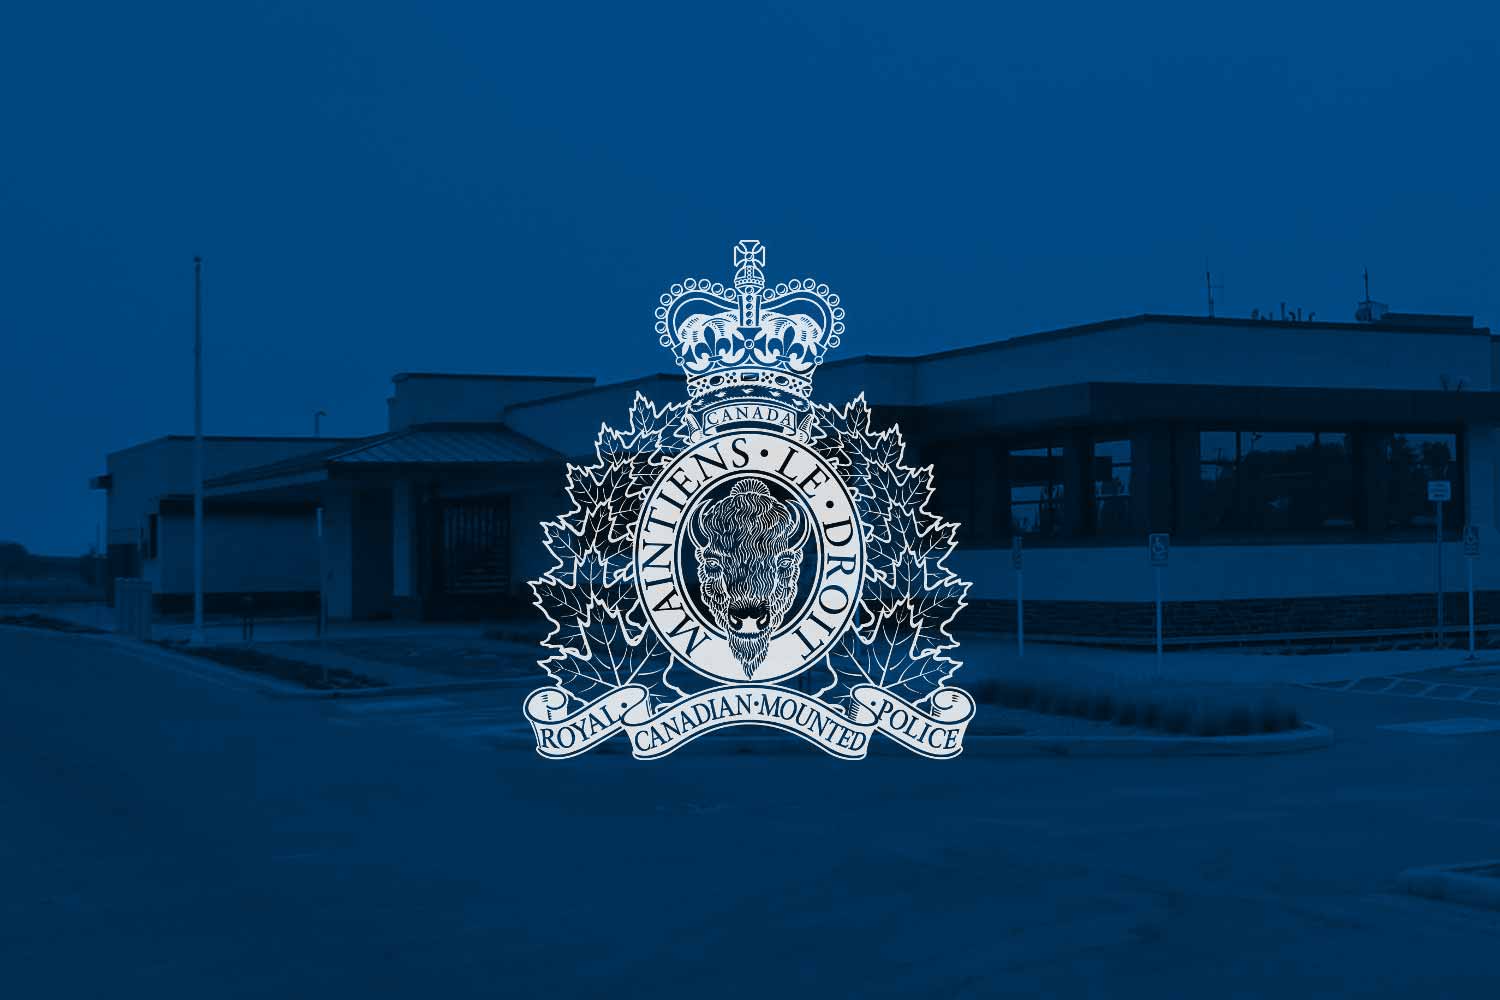 Coaldale Royal Canadian Mounted Police Building